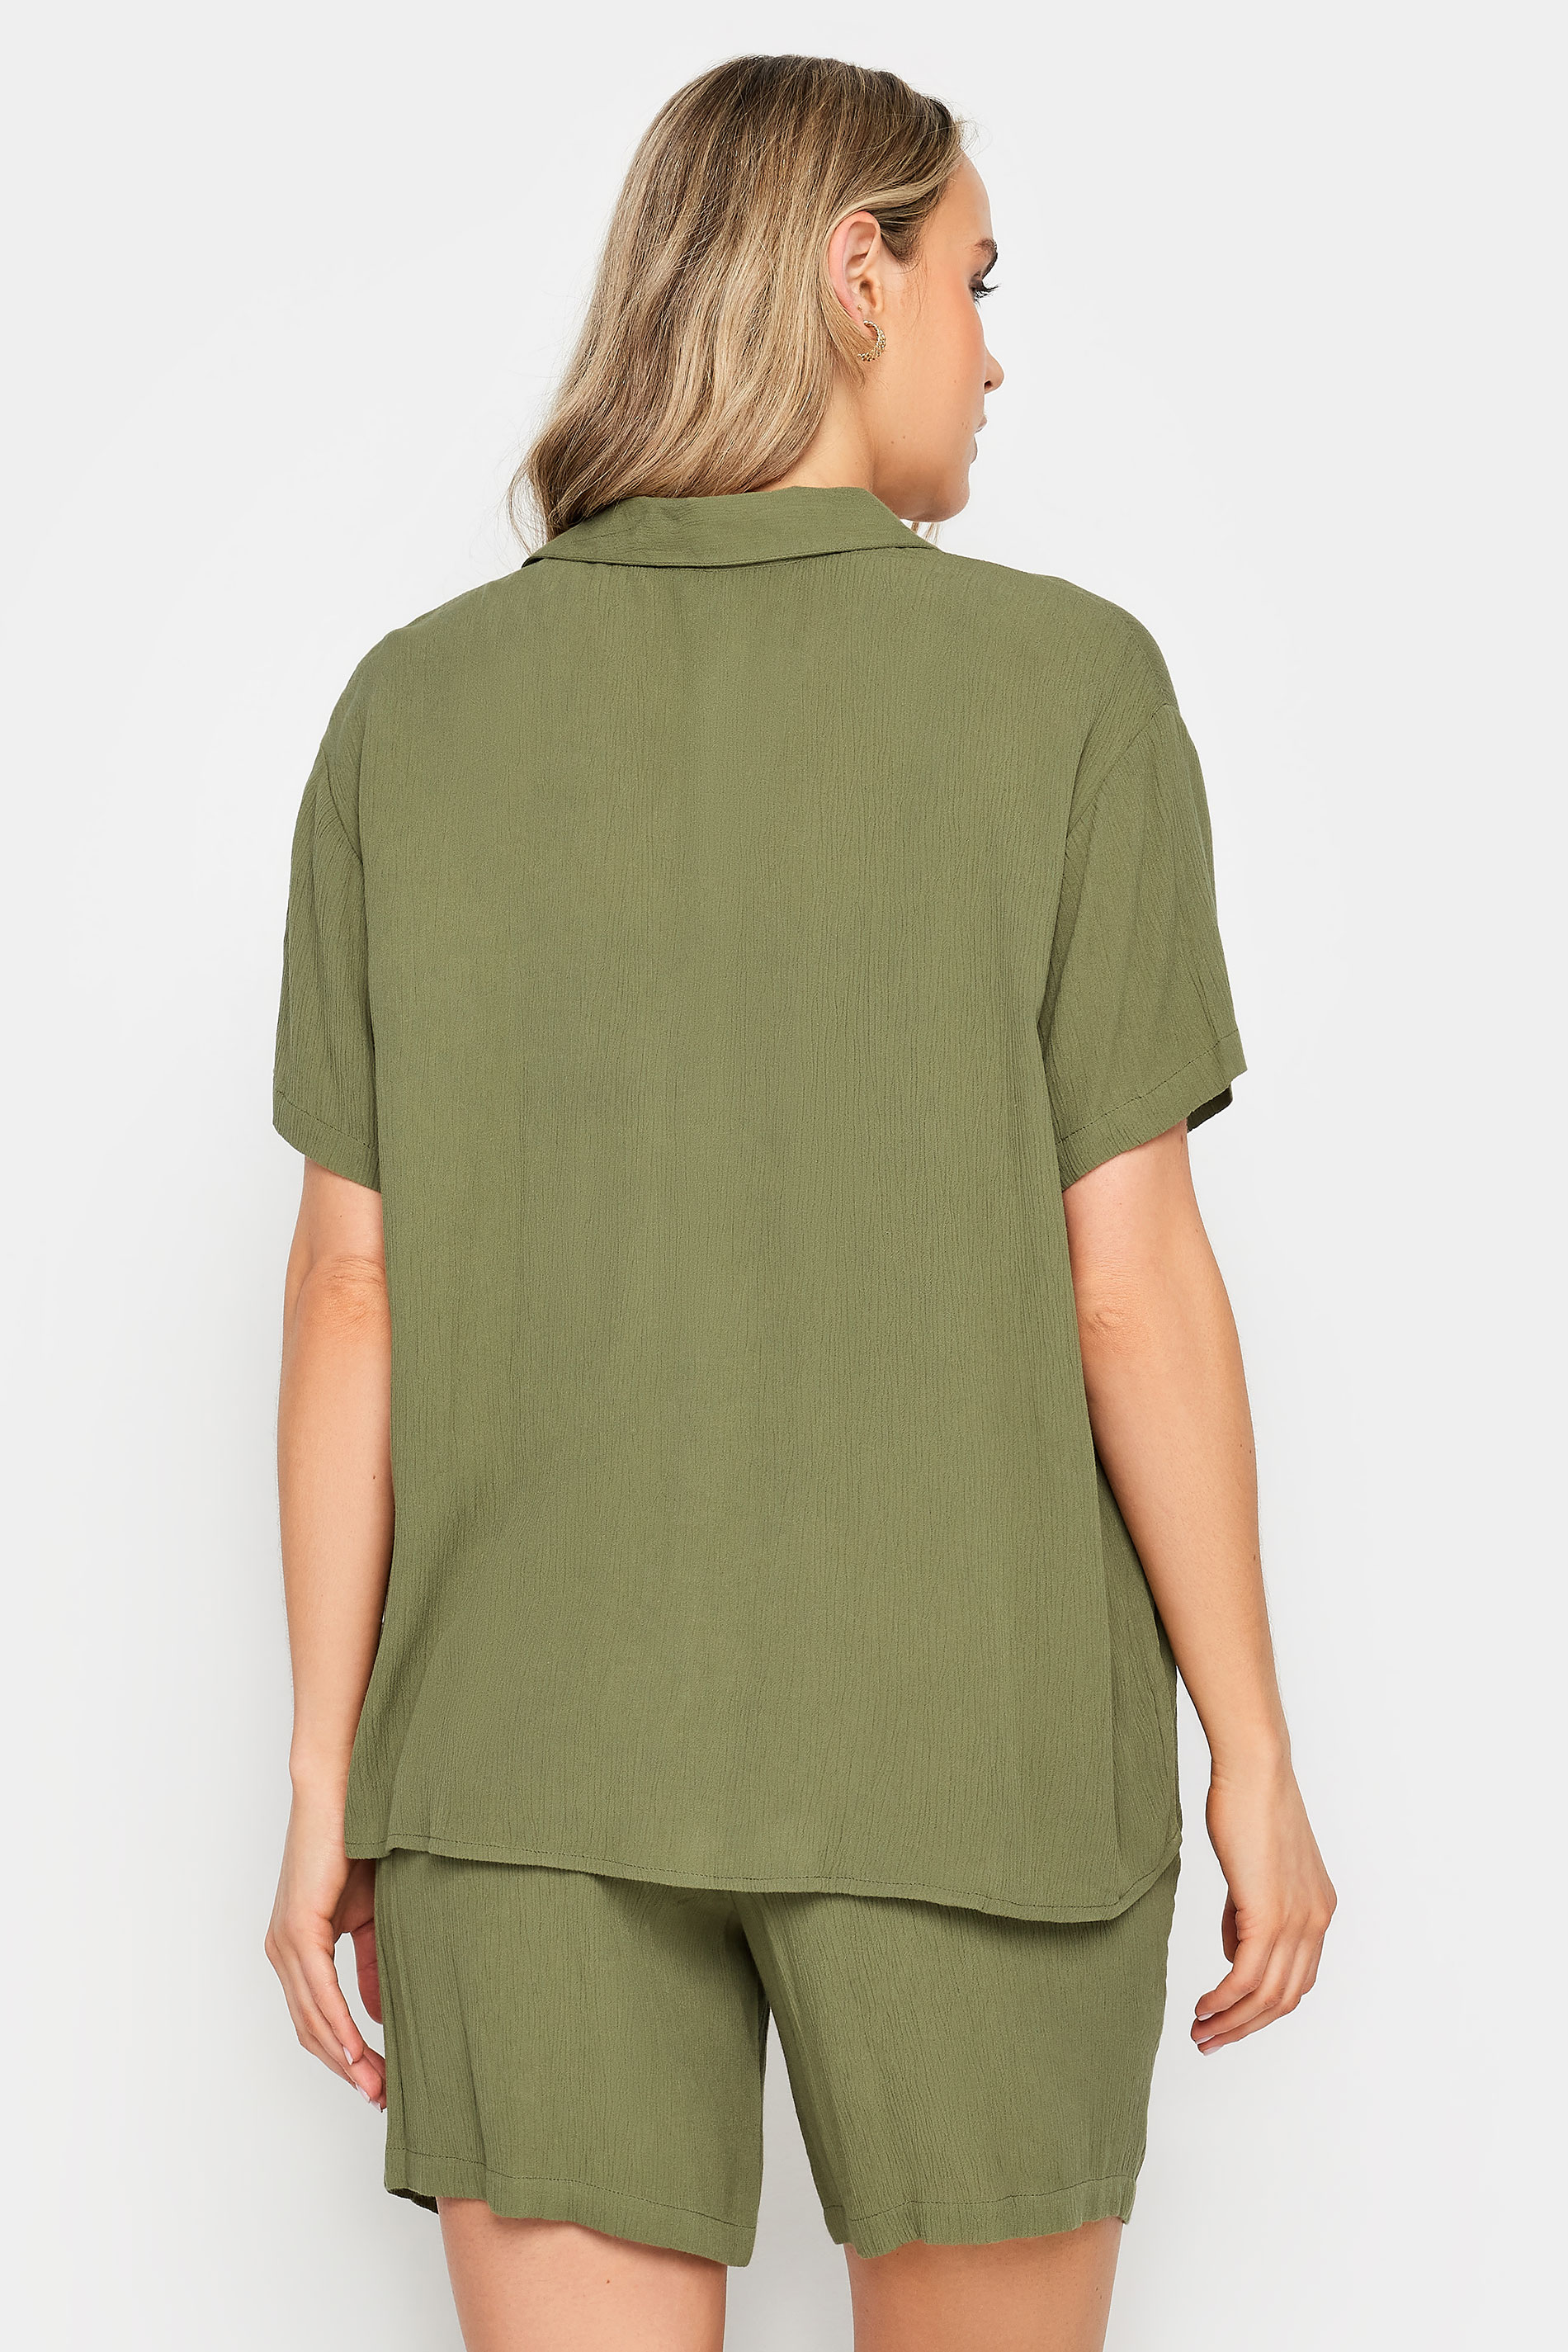 LTS Tall Womens Olive Green Textured Shirt | Long Tall Sallly 3